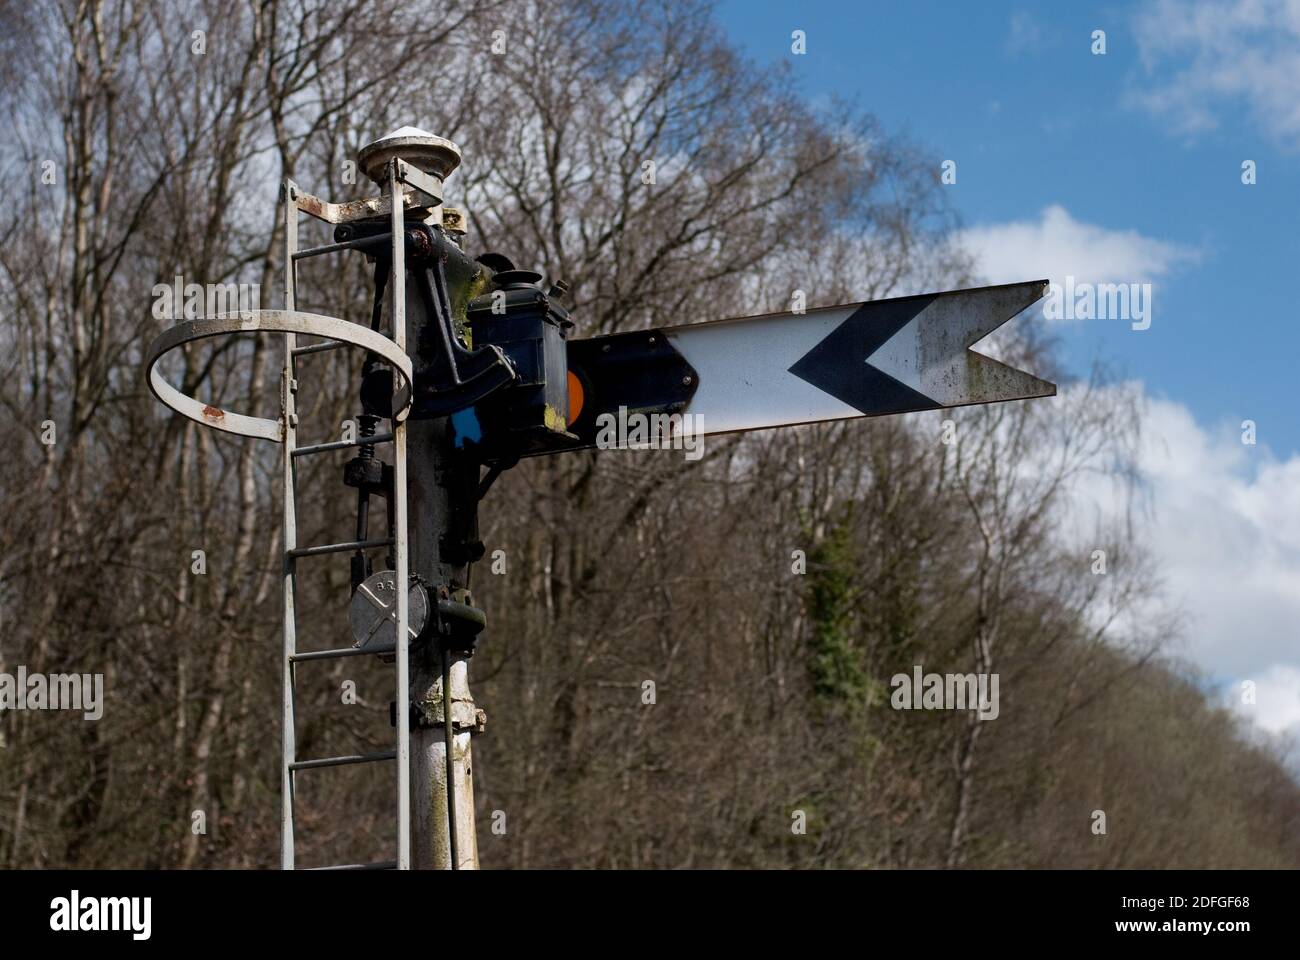 Bahnsignal Oberquadrant UK - Distanzsignal - Rückseite. Stockfoto